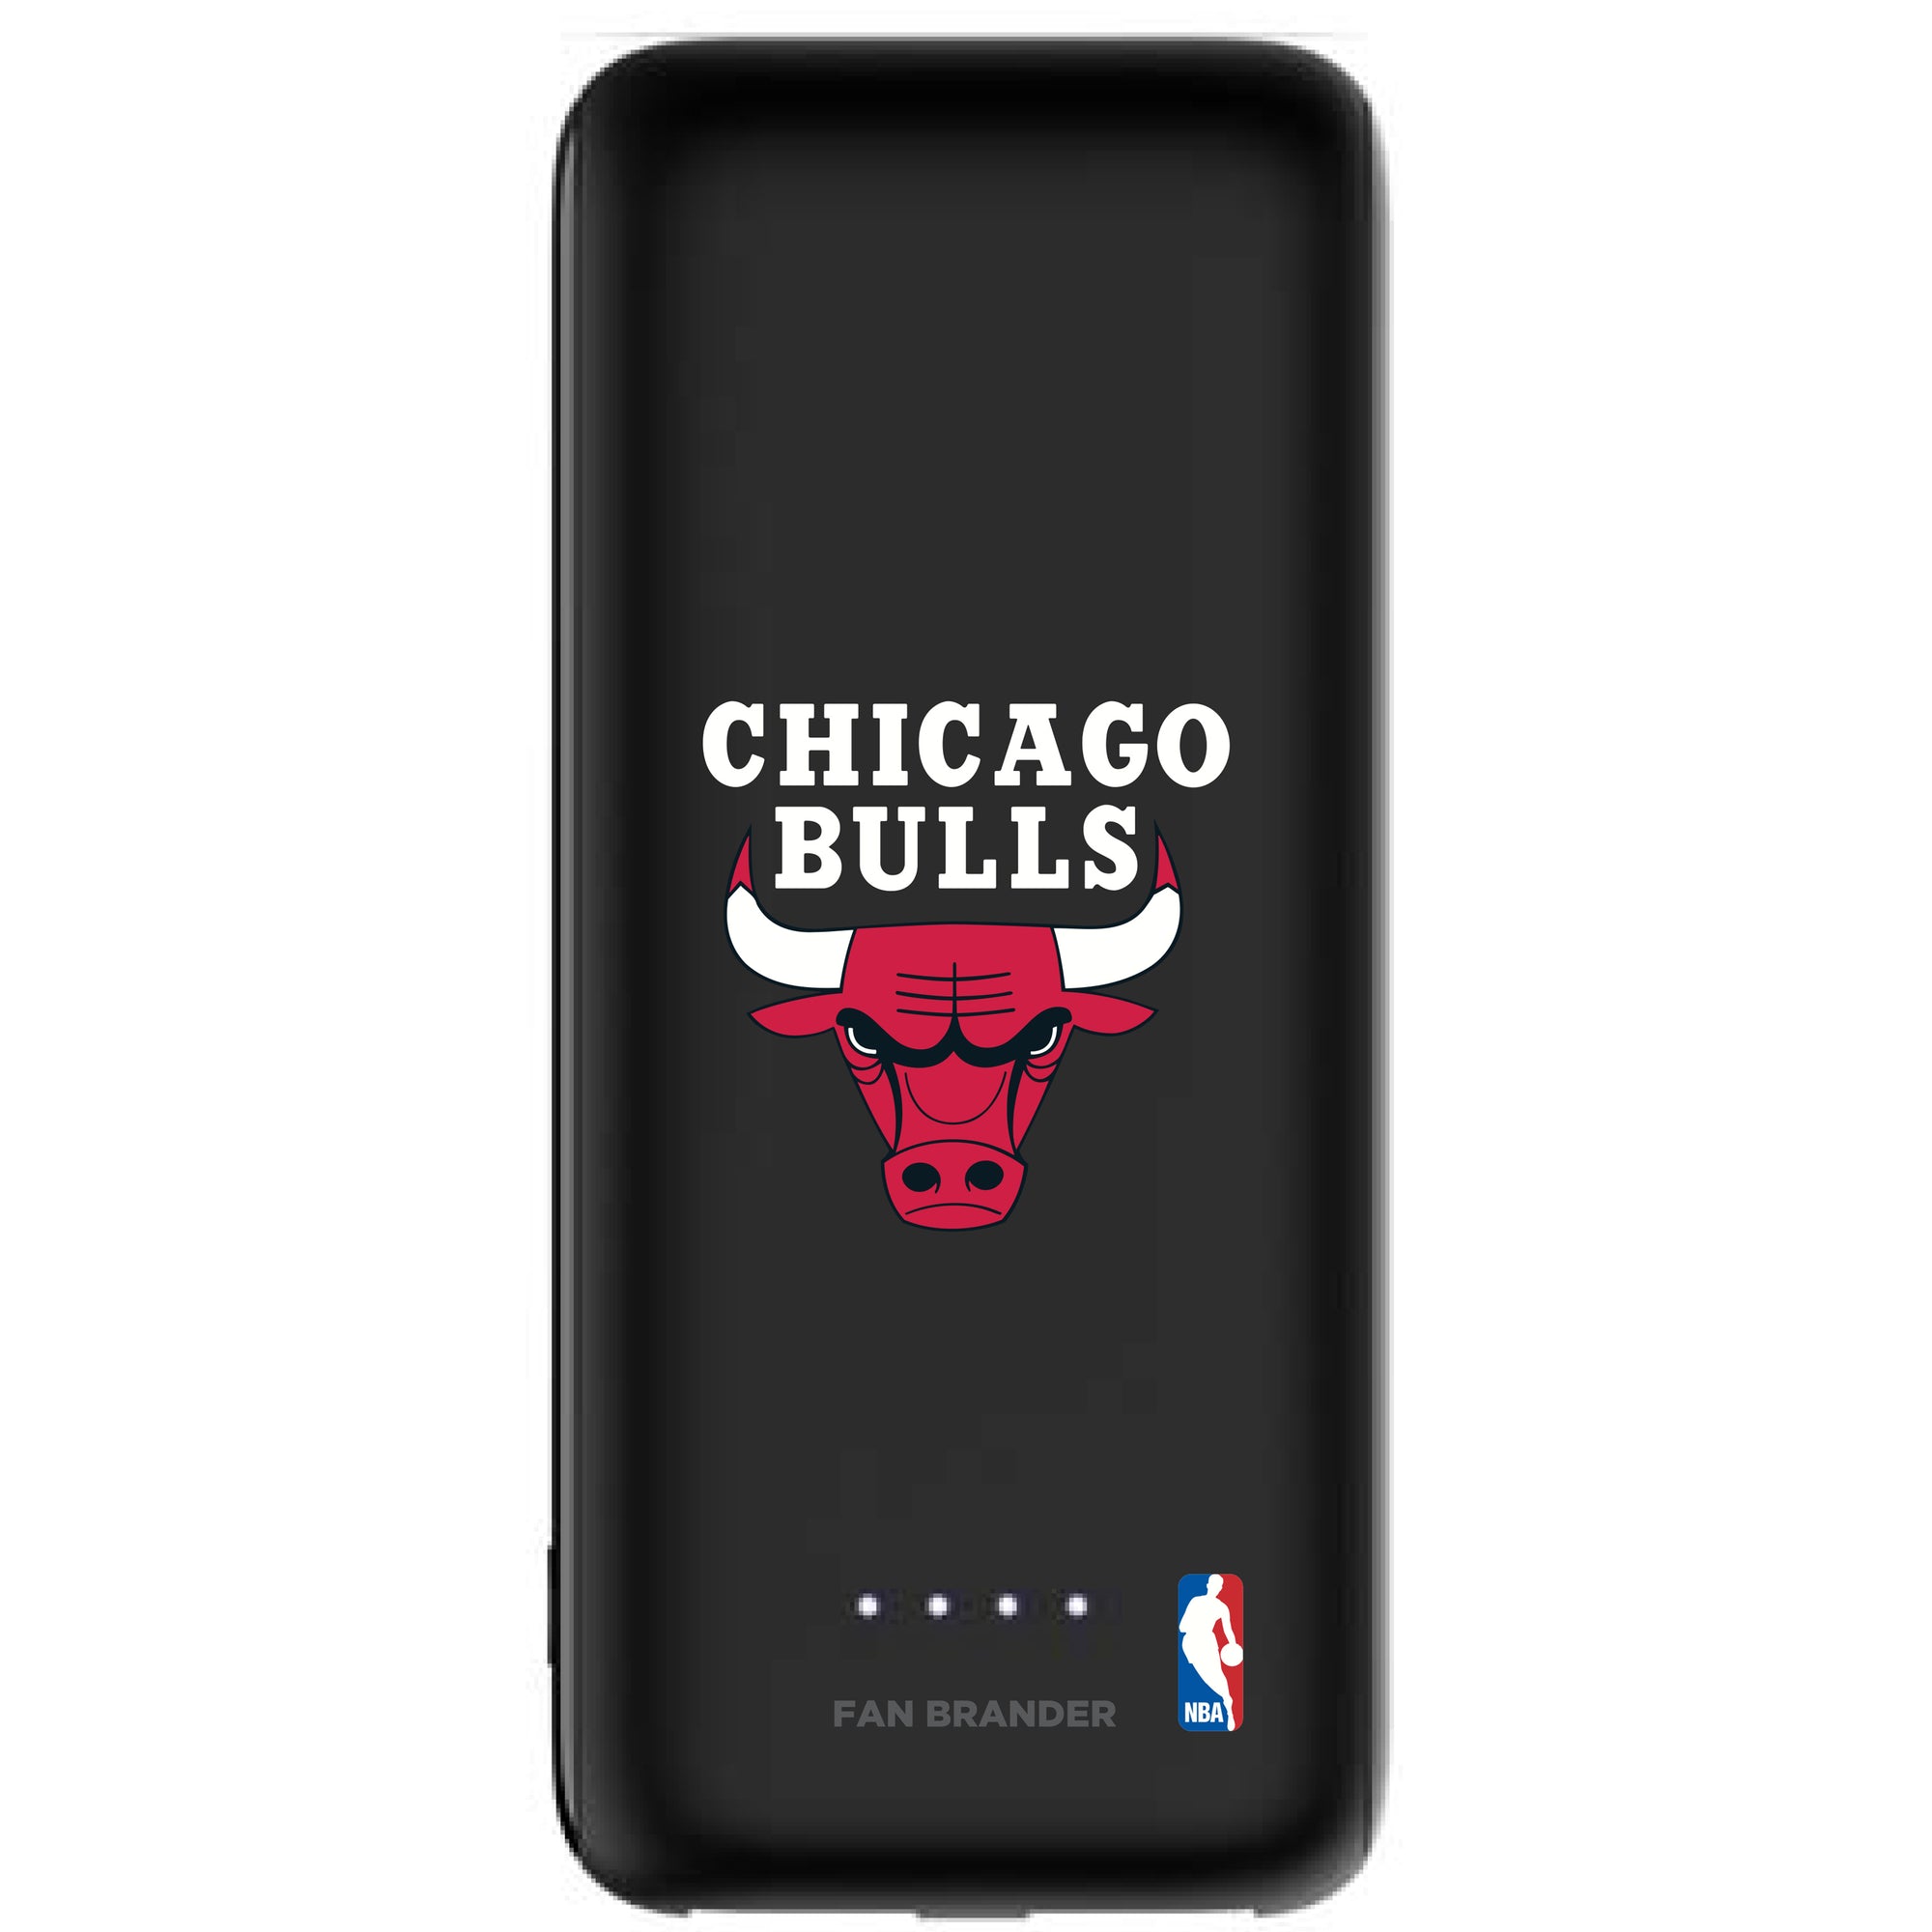 Chicago Bulls Power Boost Mini 5,200 mAH